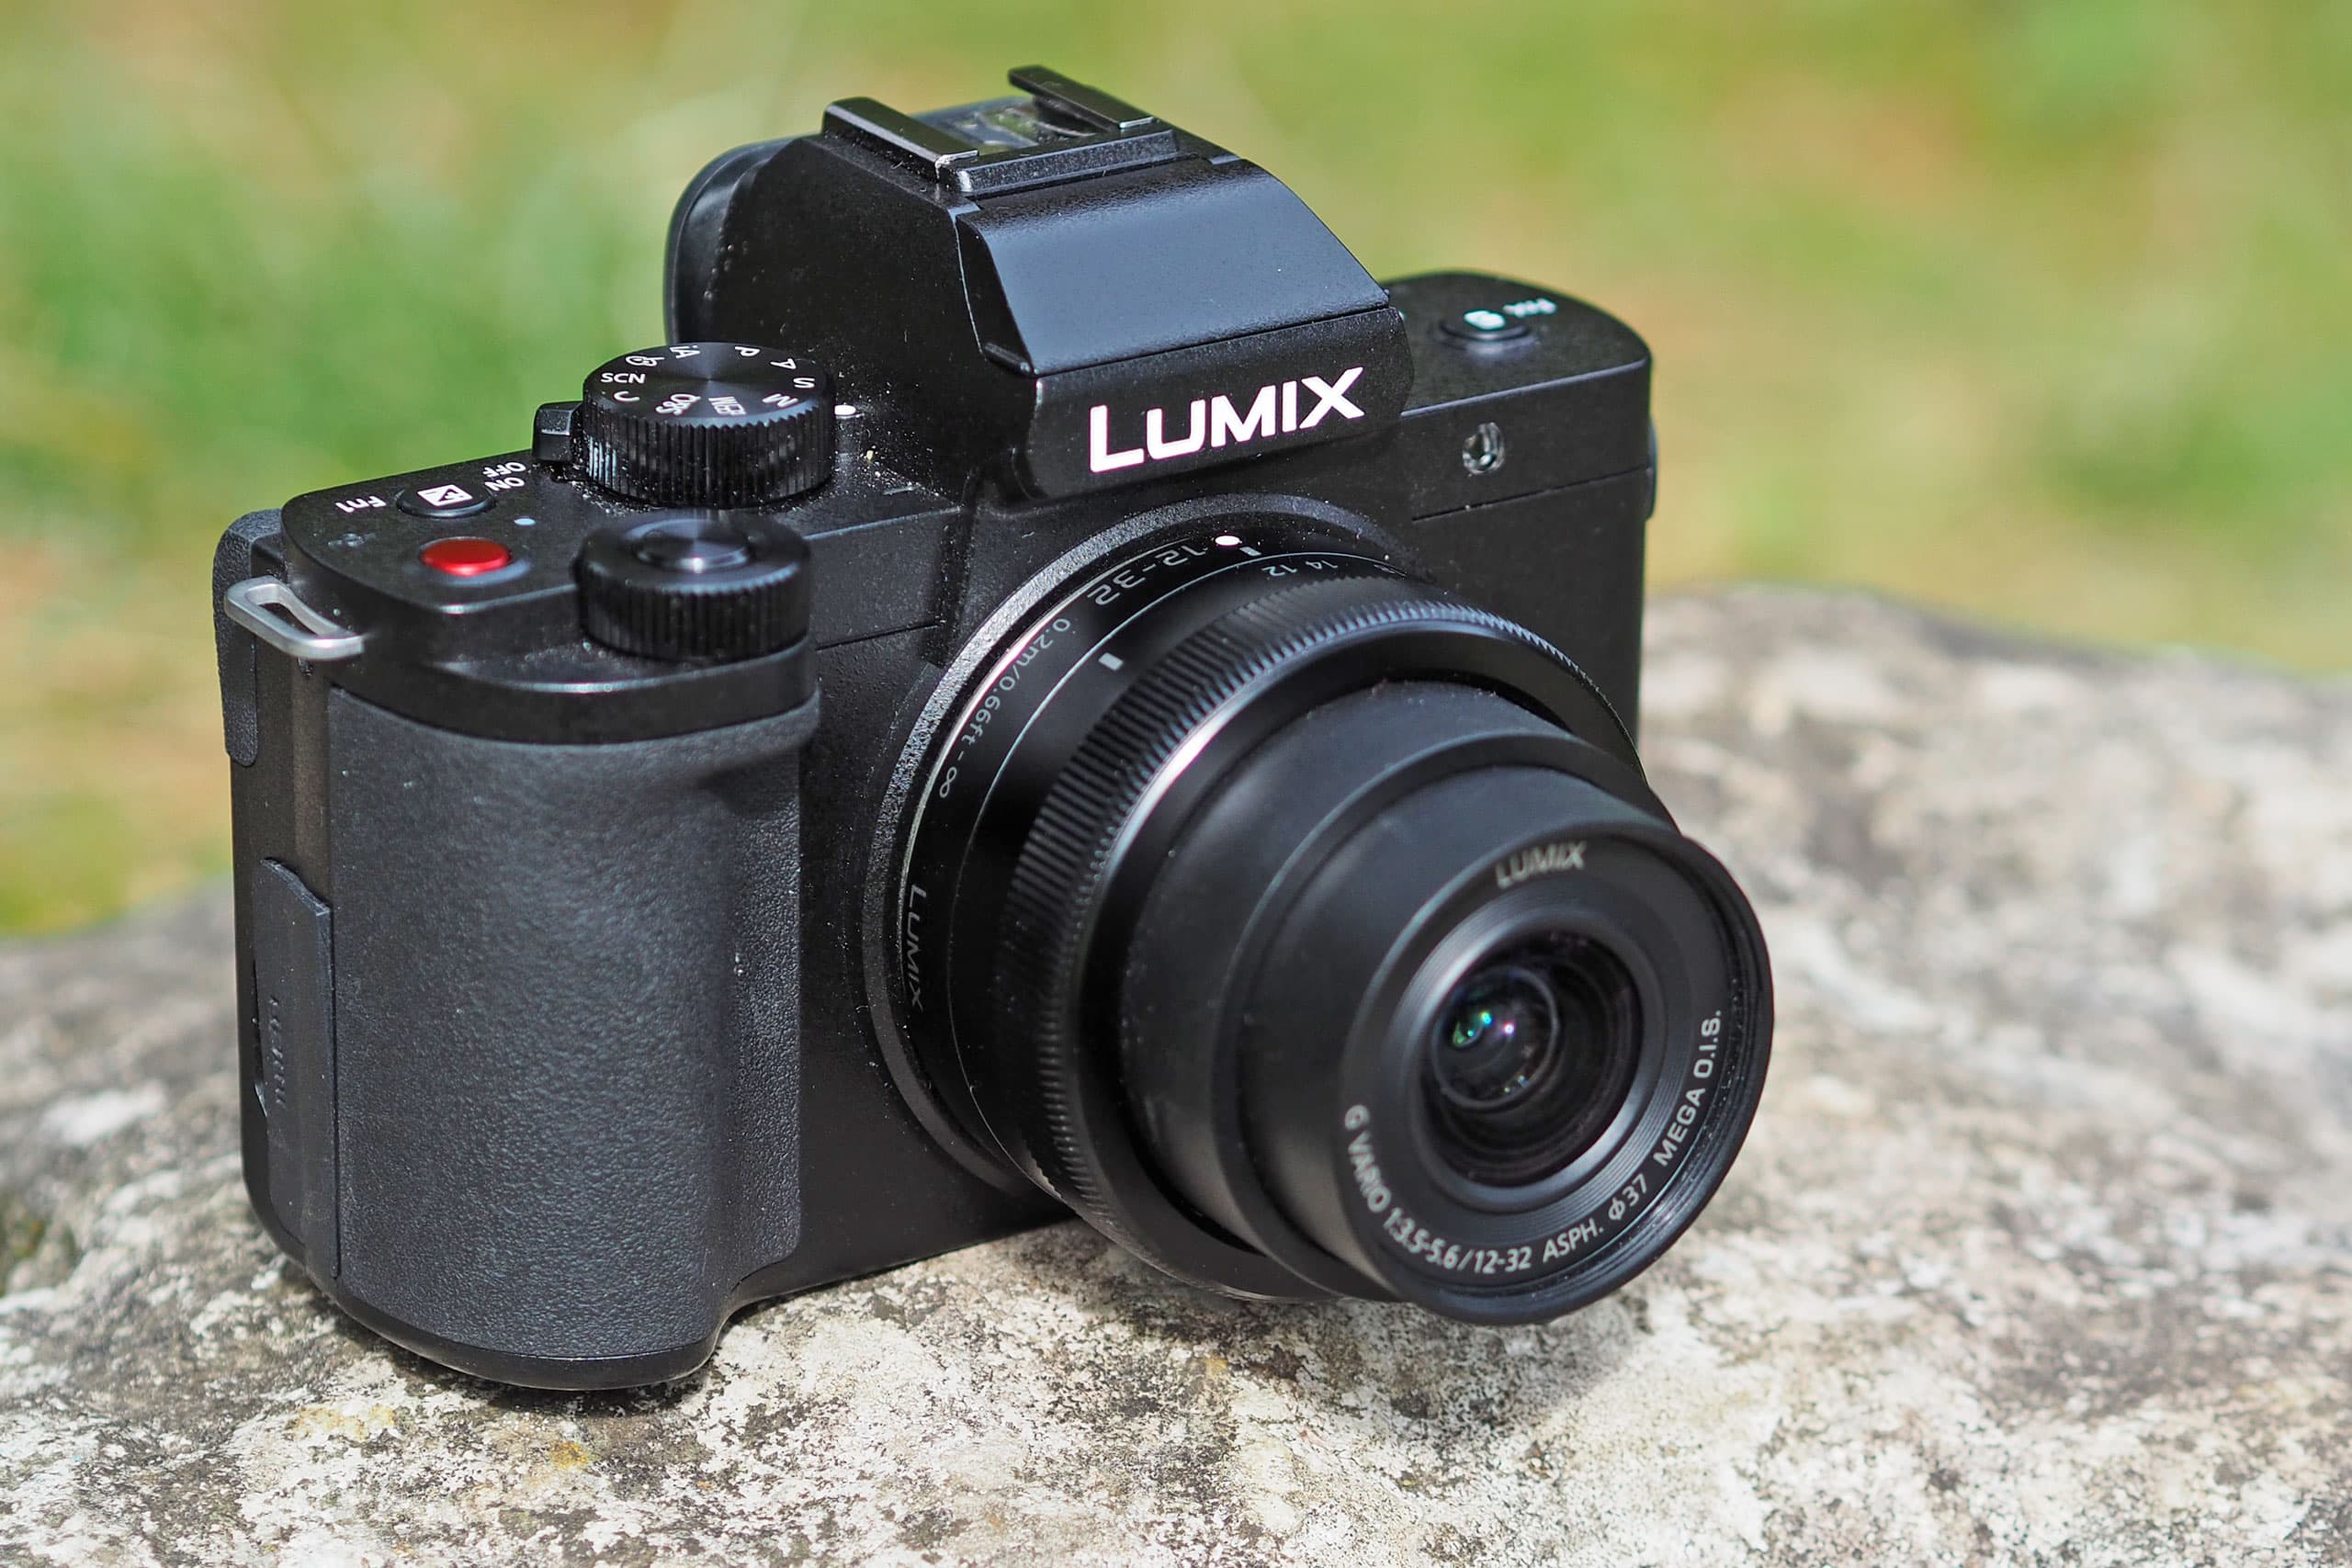 Panasonic Lumix G100 with 12-32mm Lens